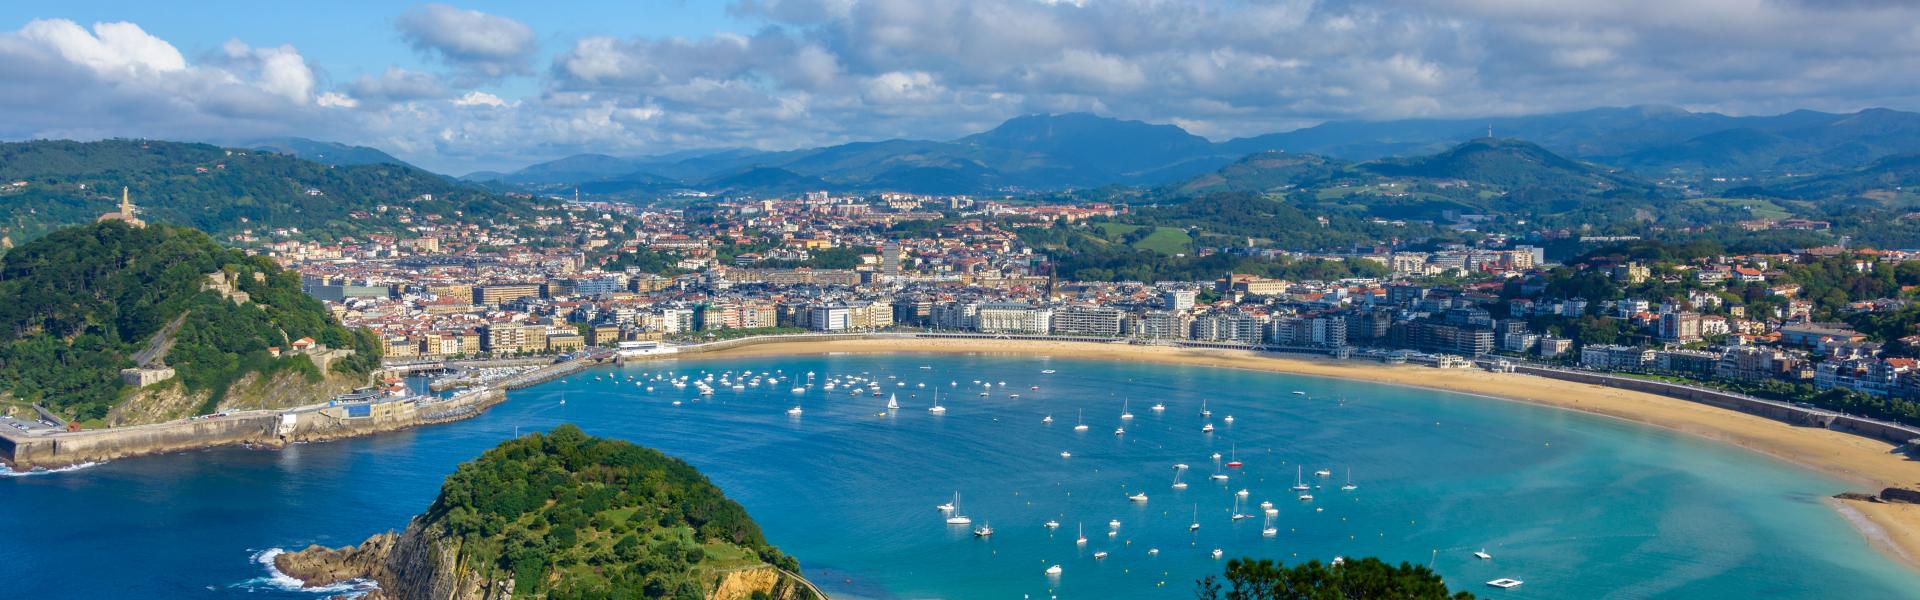 Locations de vacances au Pays Basque espagnol - Casamundo